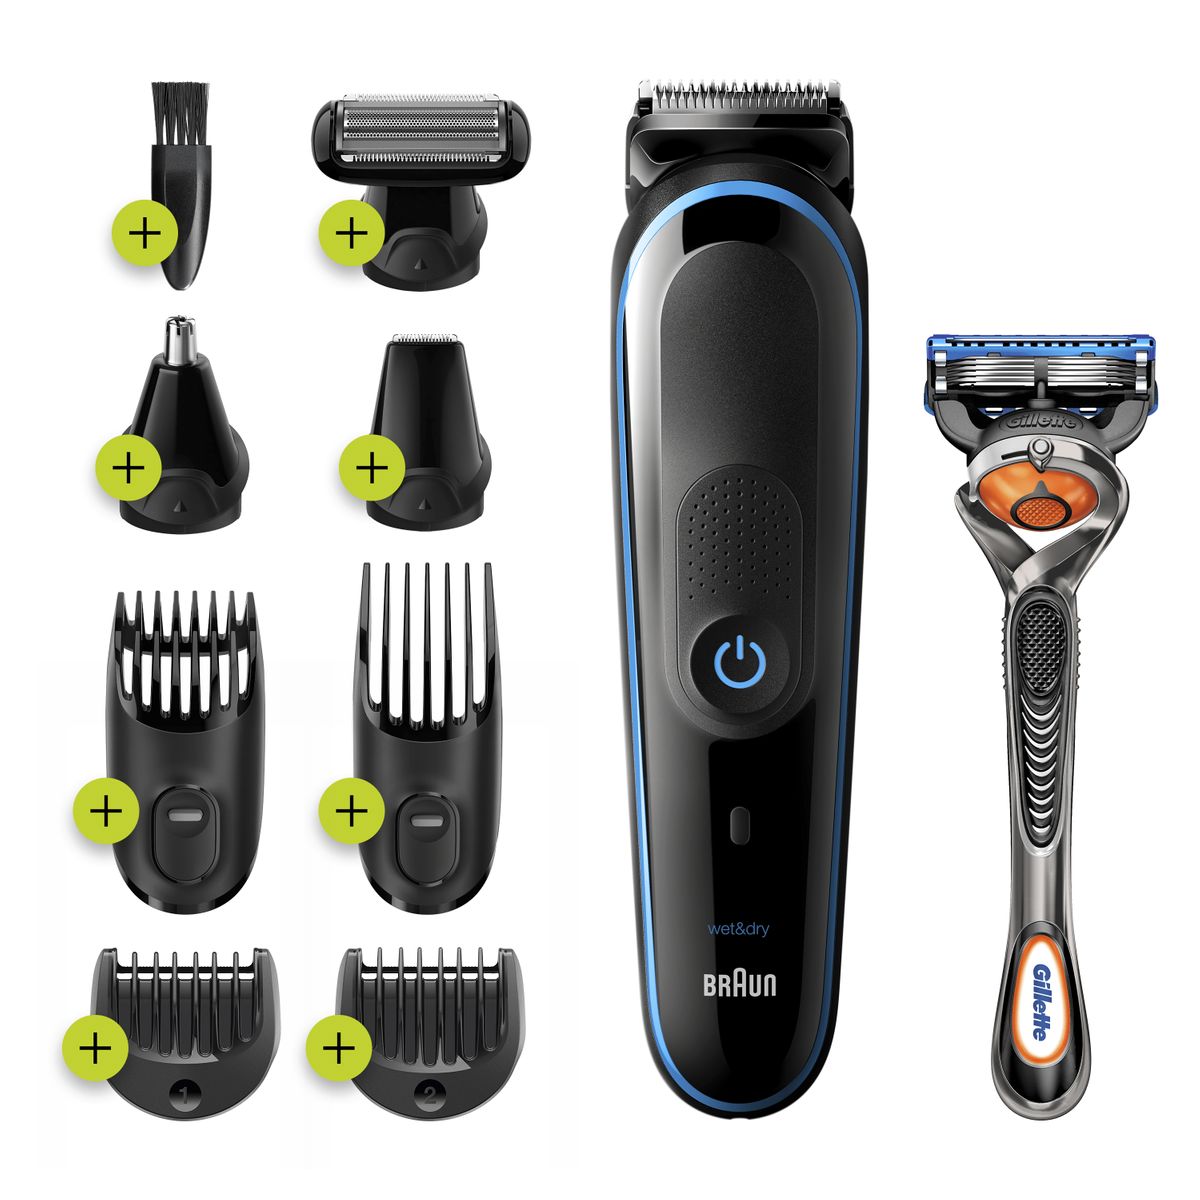 Braun beard trimmer/hair clipper men, trimmer/hair clipper & shaver, 9-in-1 set for beard, face, head, body, ears and nose, MGK5280, black/blue.